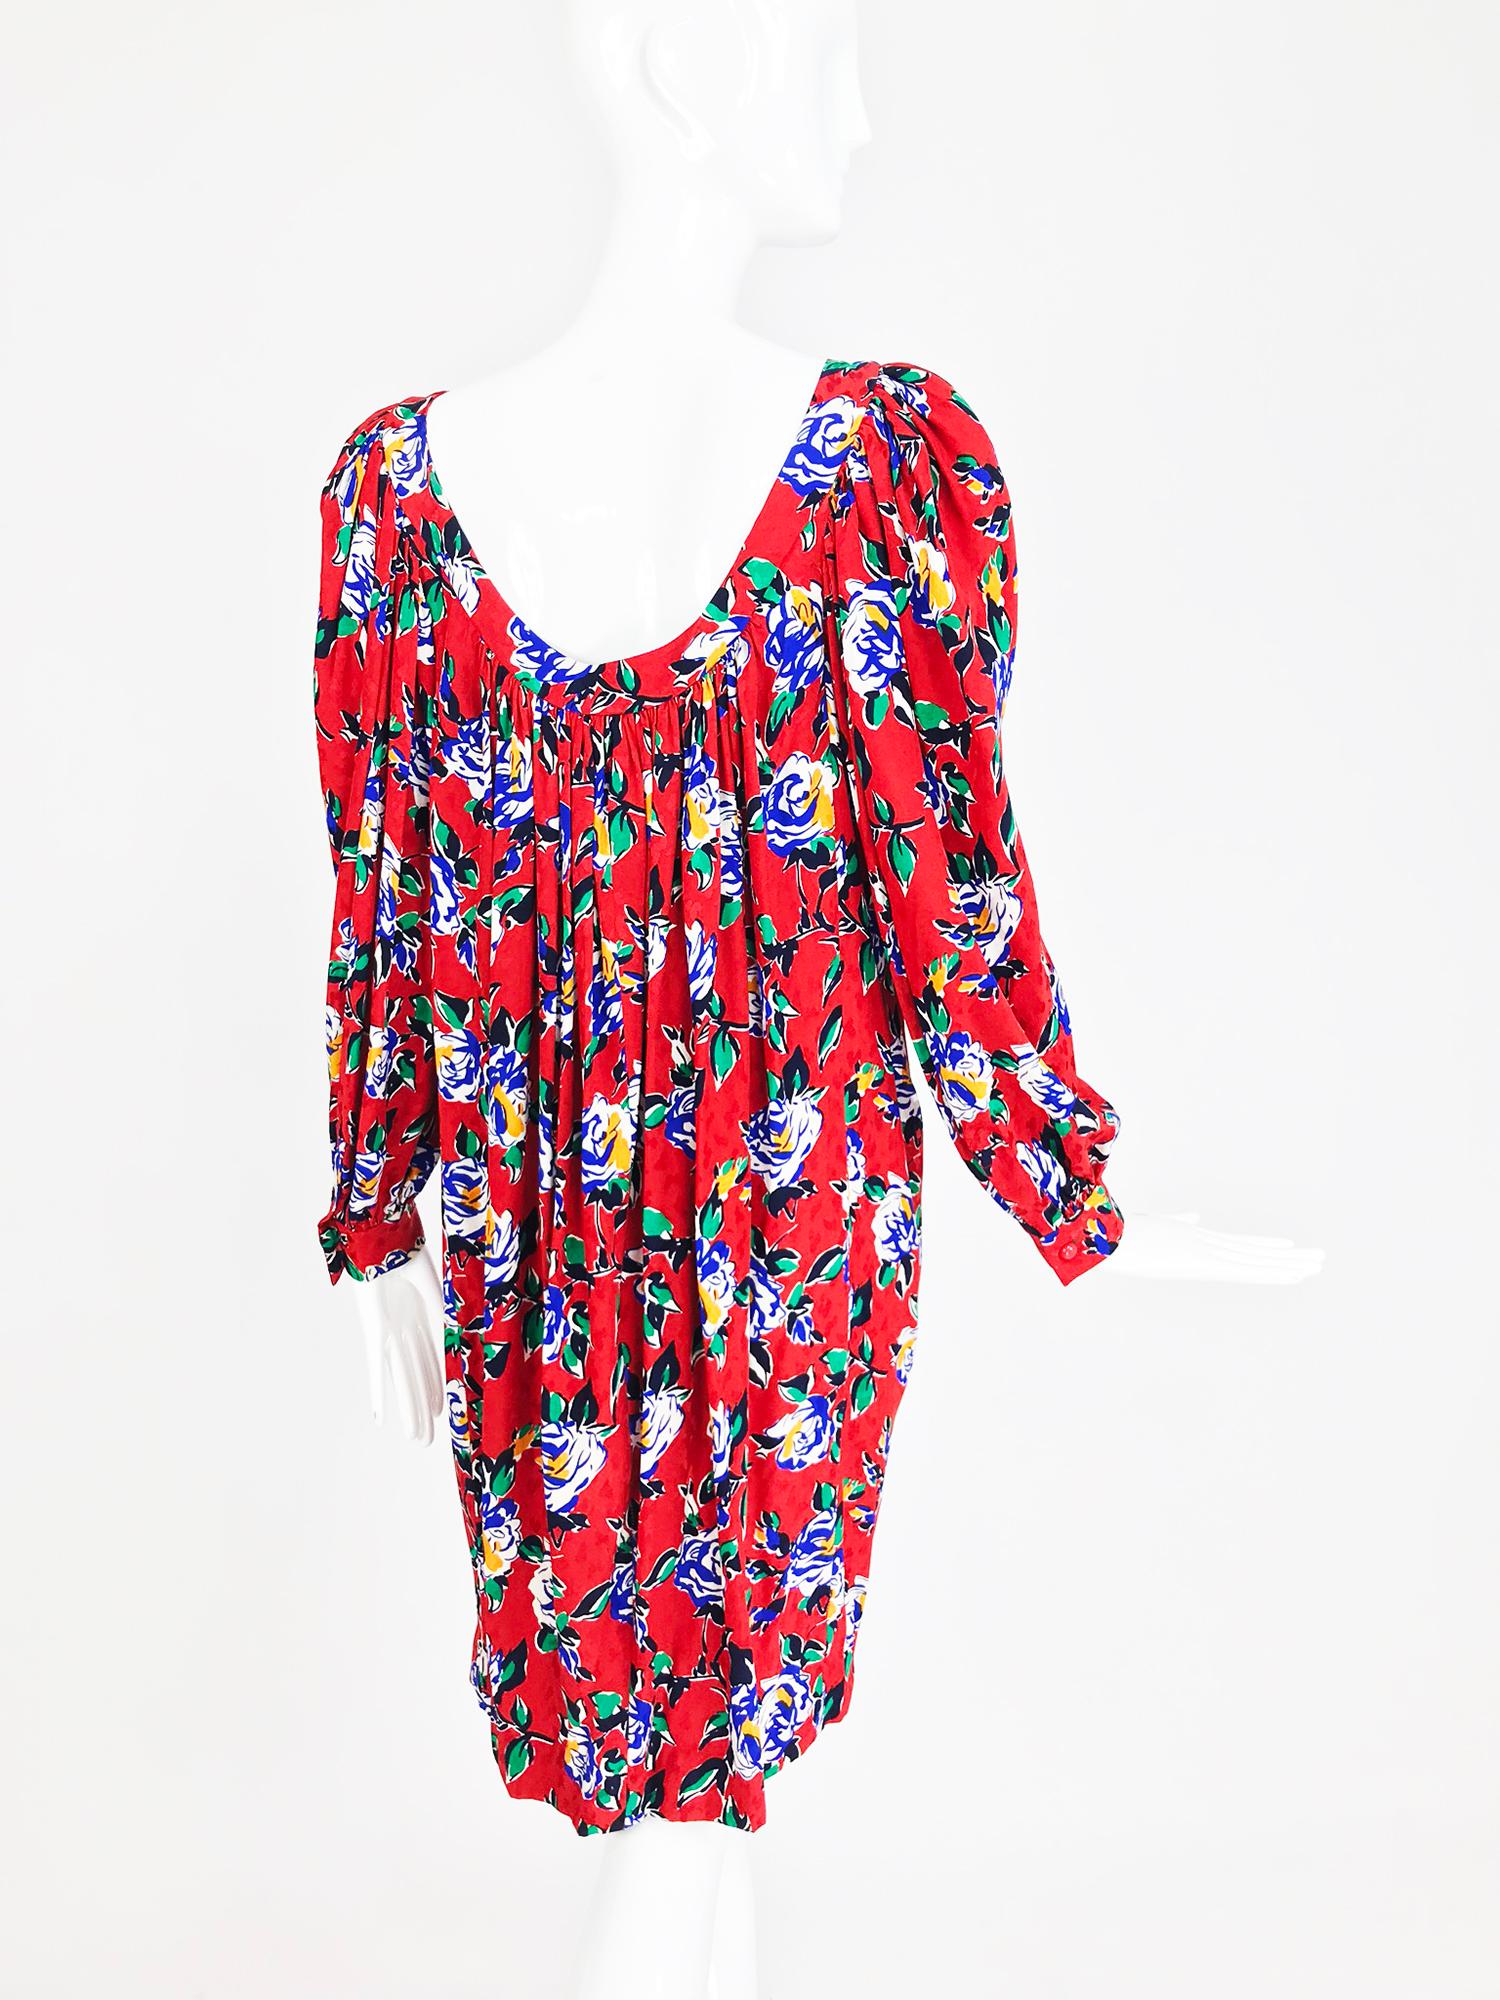 Yves Saint Laurent Red Floral Silk Jacquard Scoop Neck Dress 1990s 3